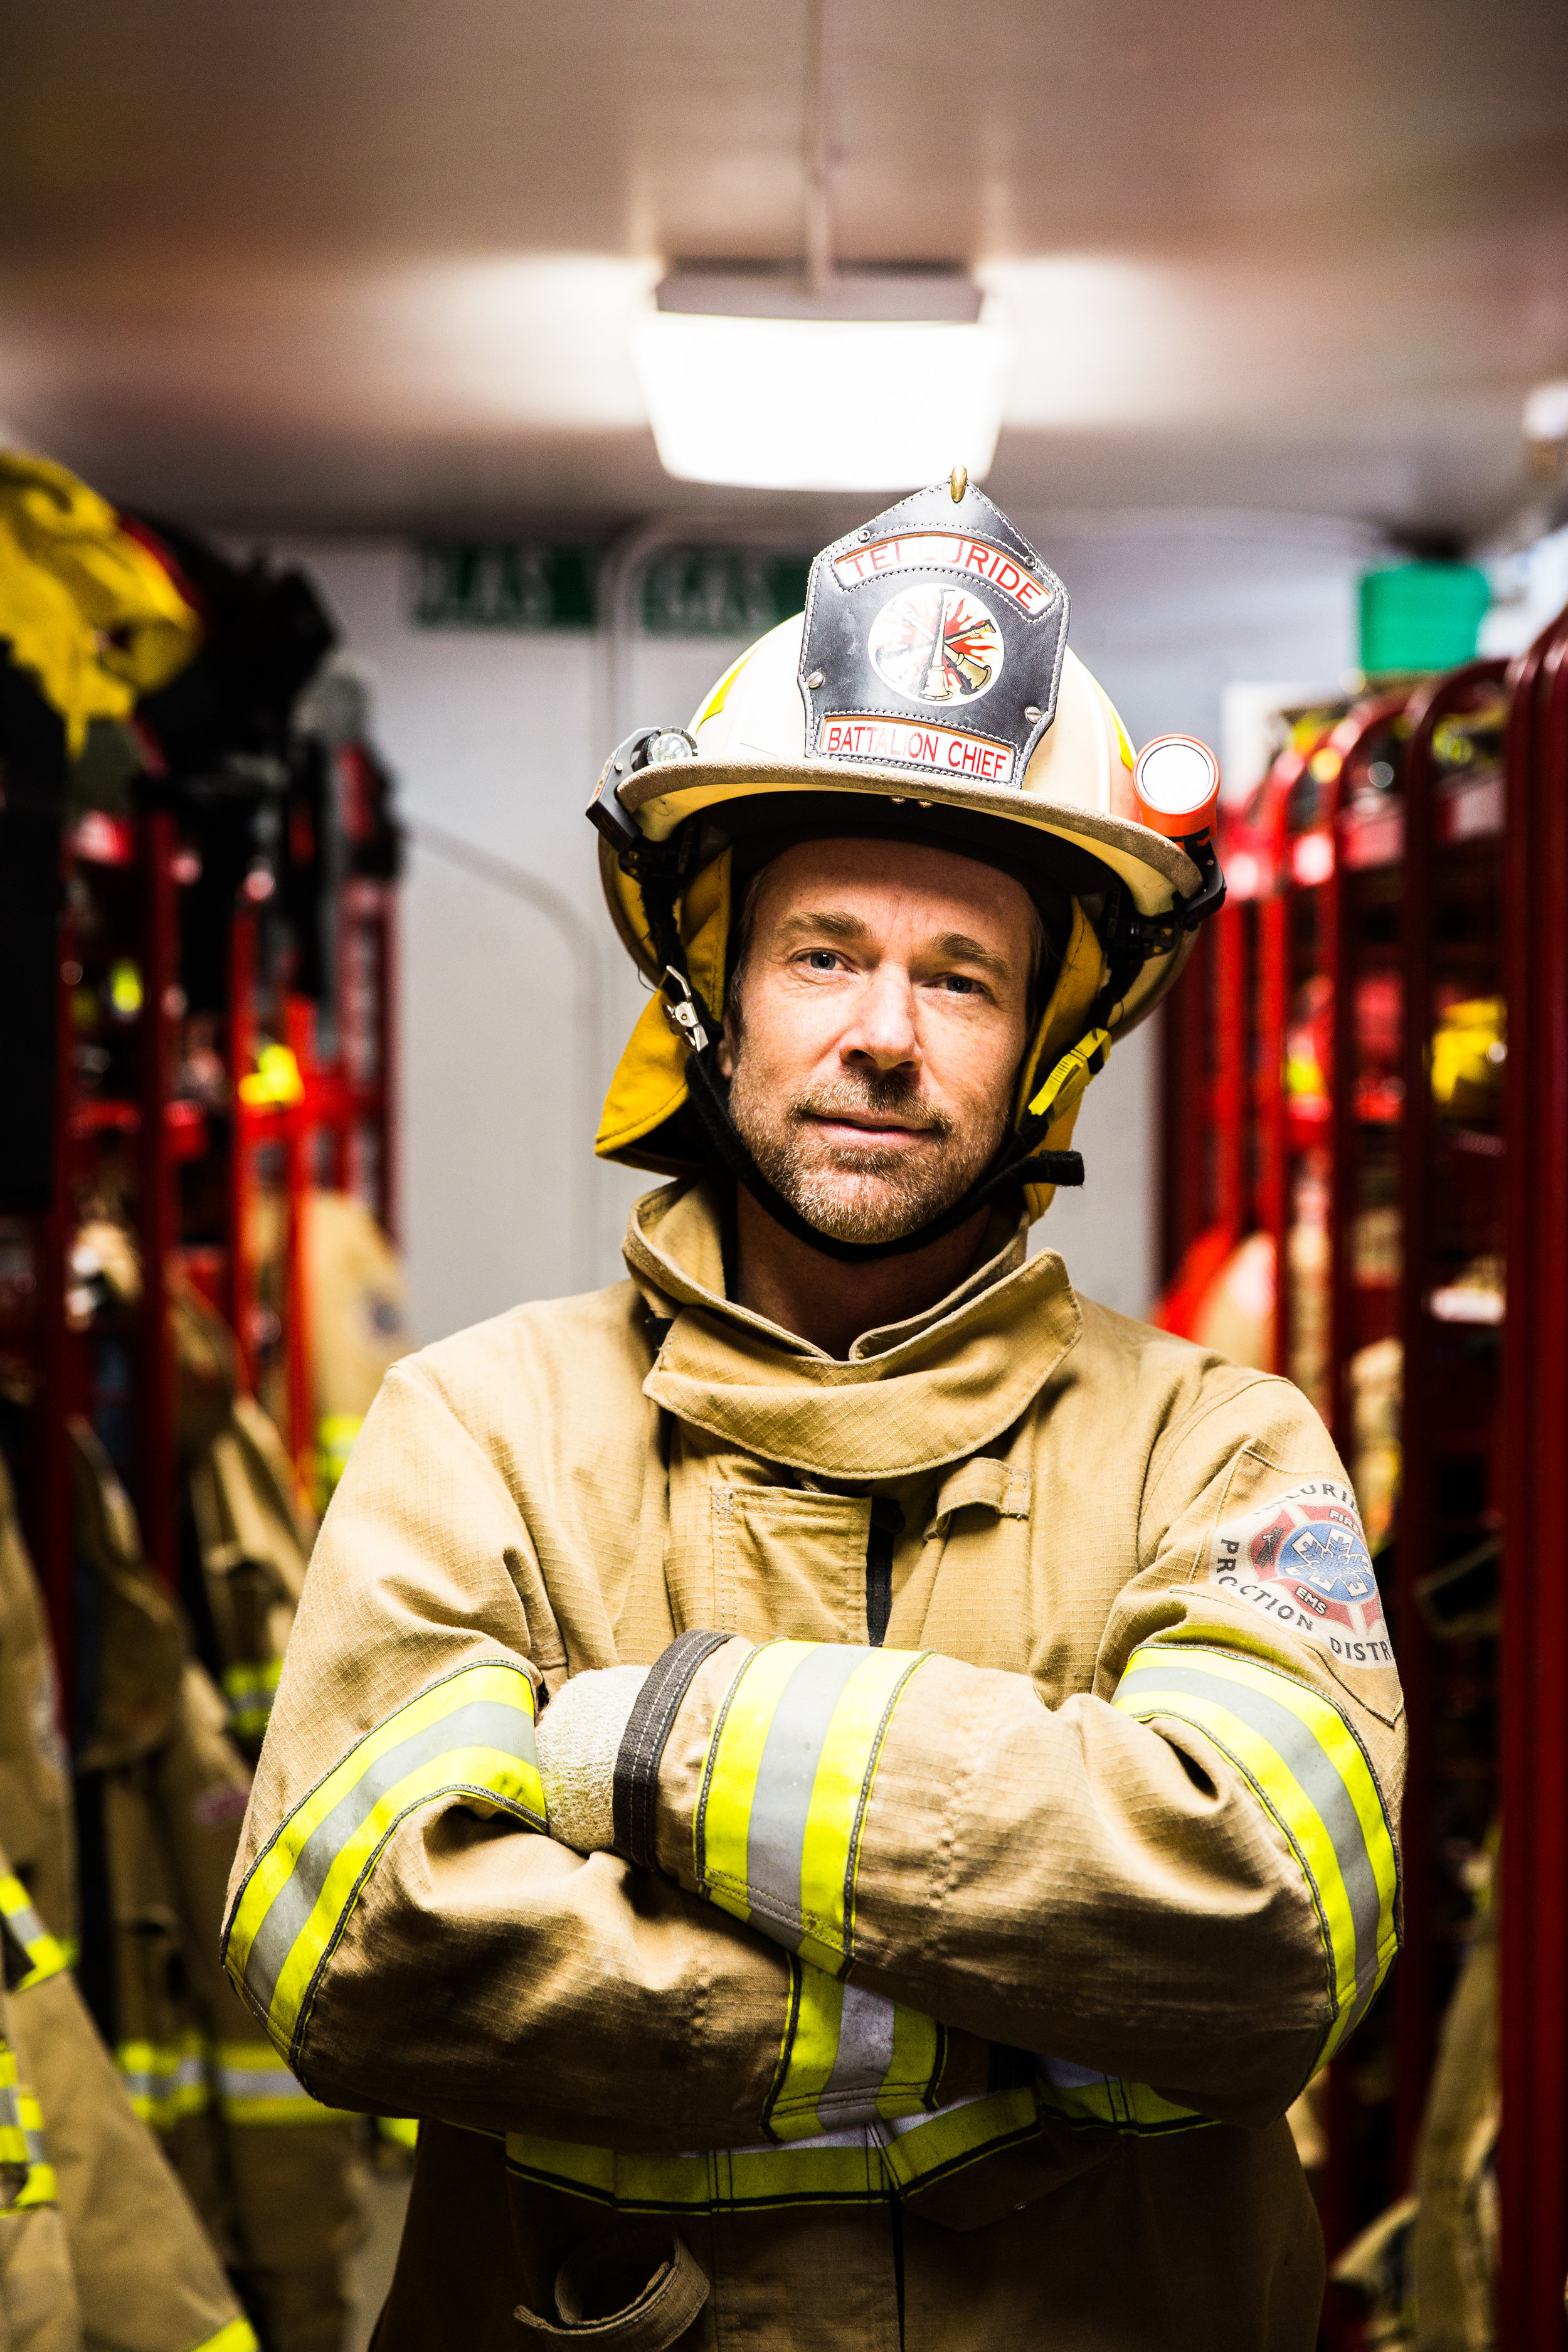 Telluride Portrait Photography - Firefighter Portrait